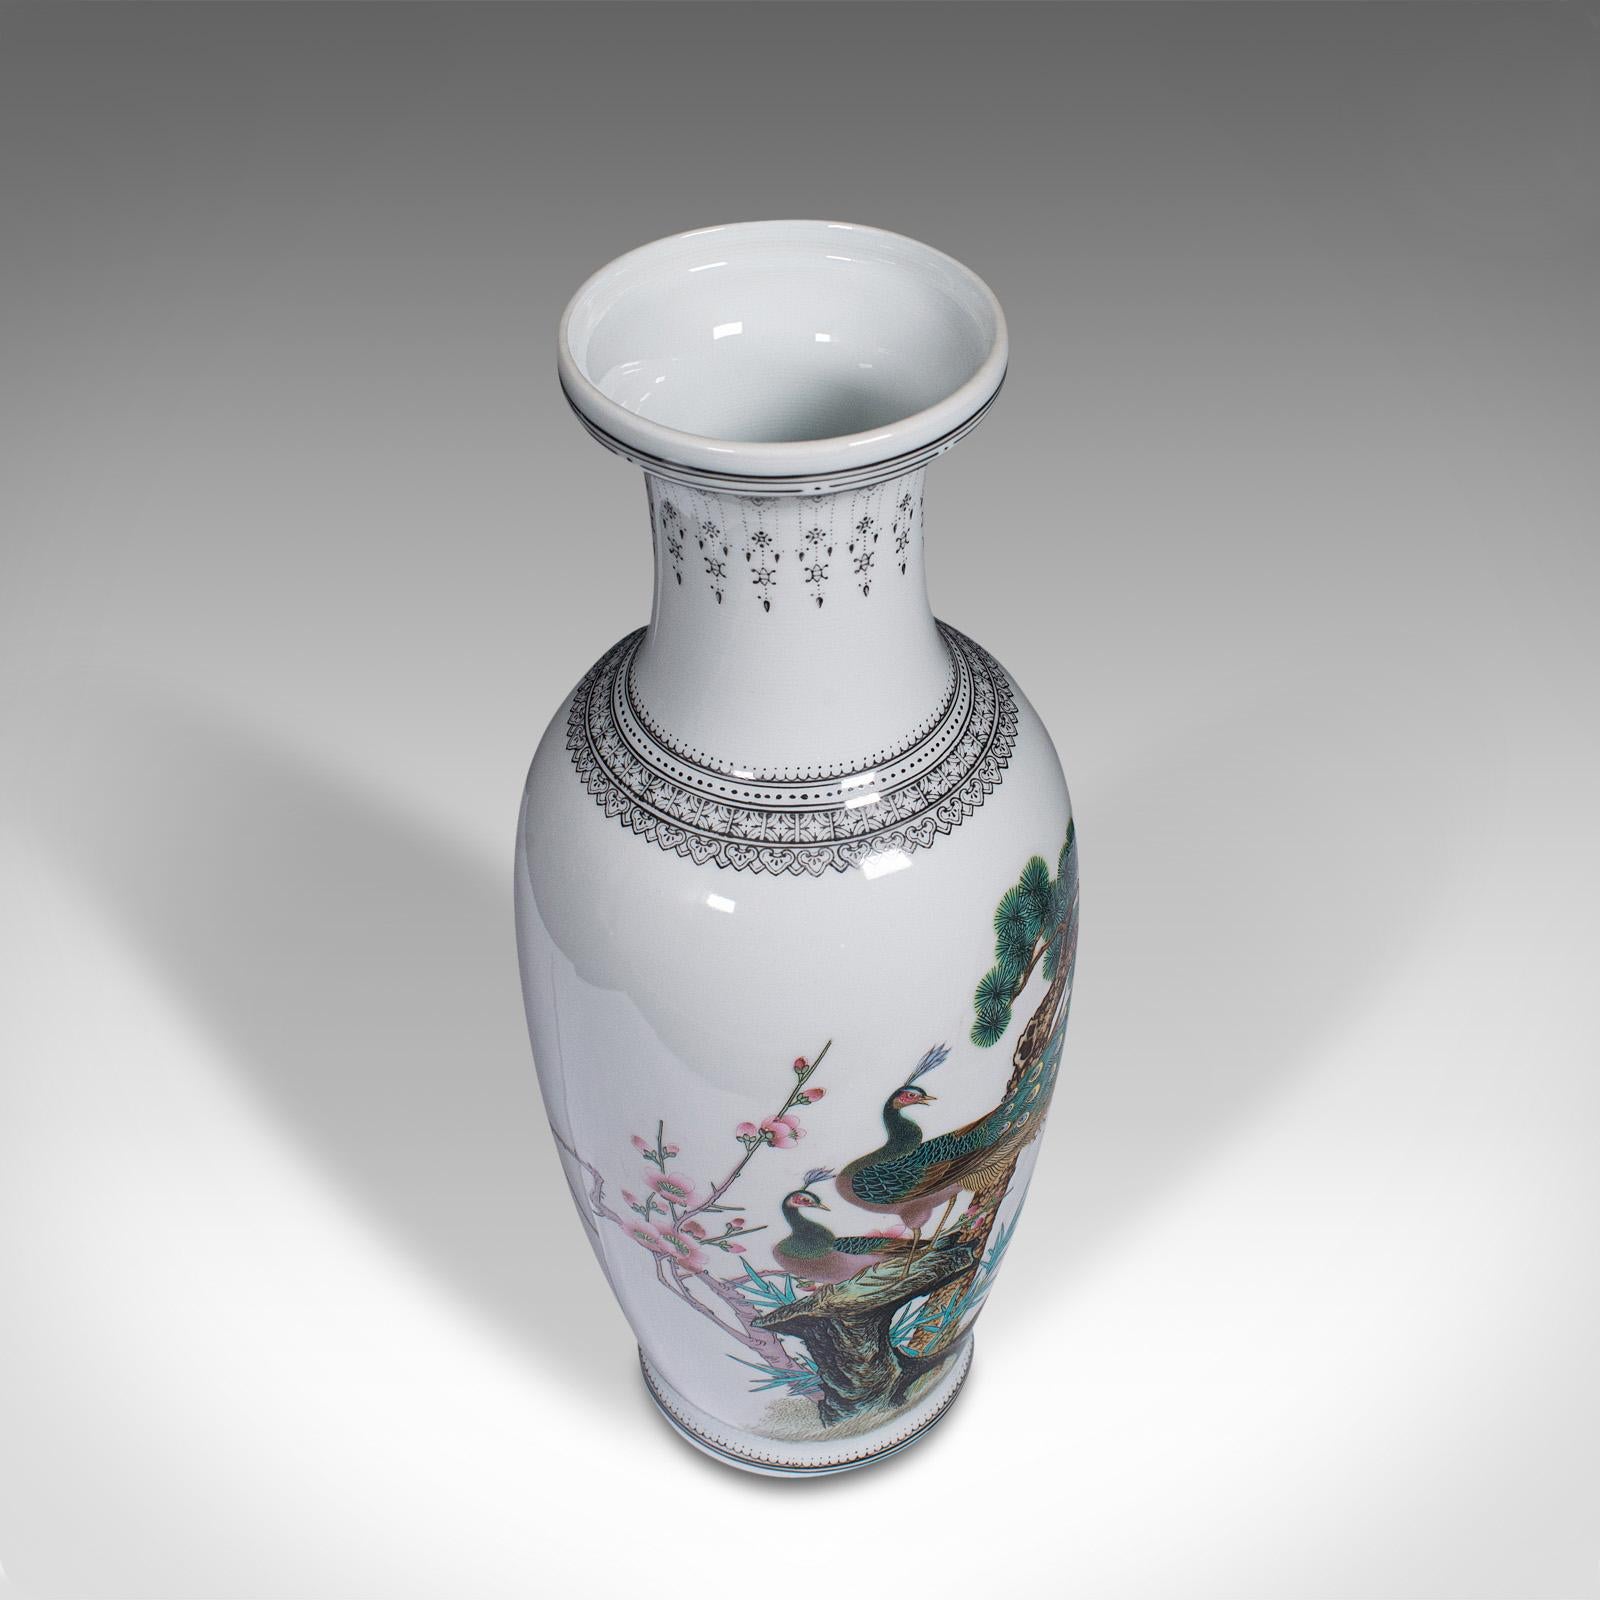 Vintage Decorative Posy Vase, Chinese, Ceramic Flower Urn, Peacock Motif, C.1960 For Sale 1